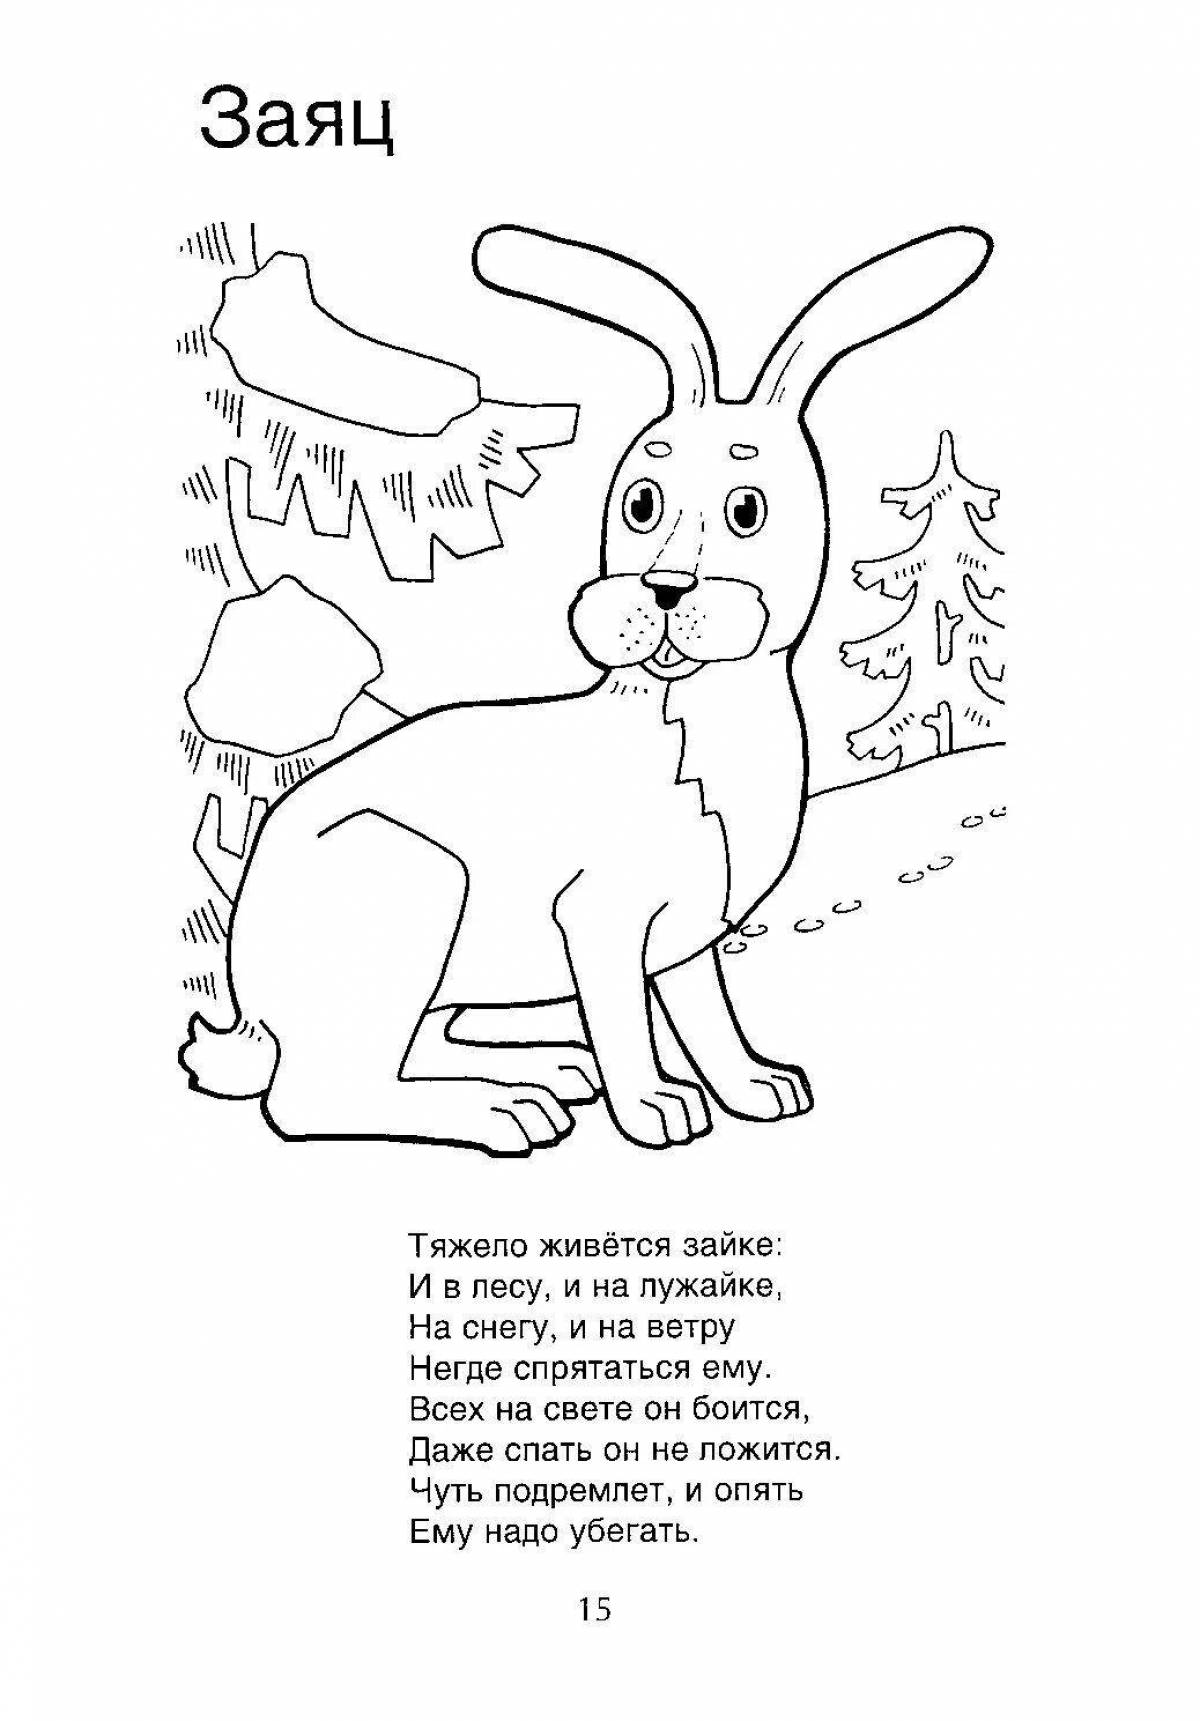 Adorable winter animal coloring book